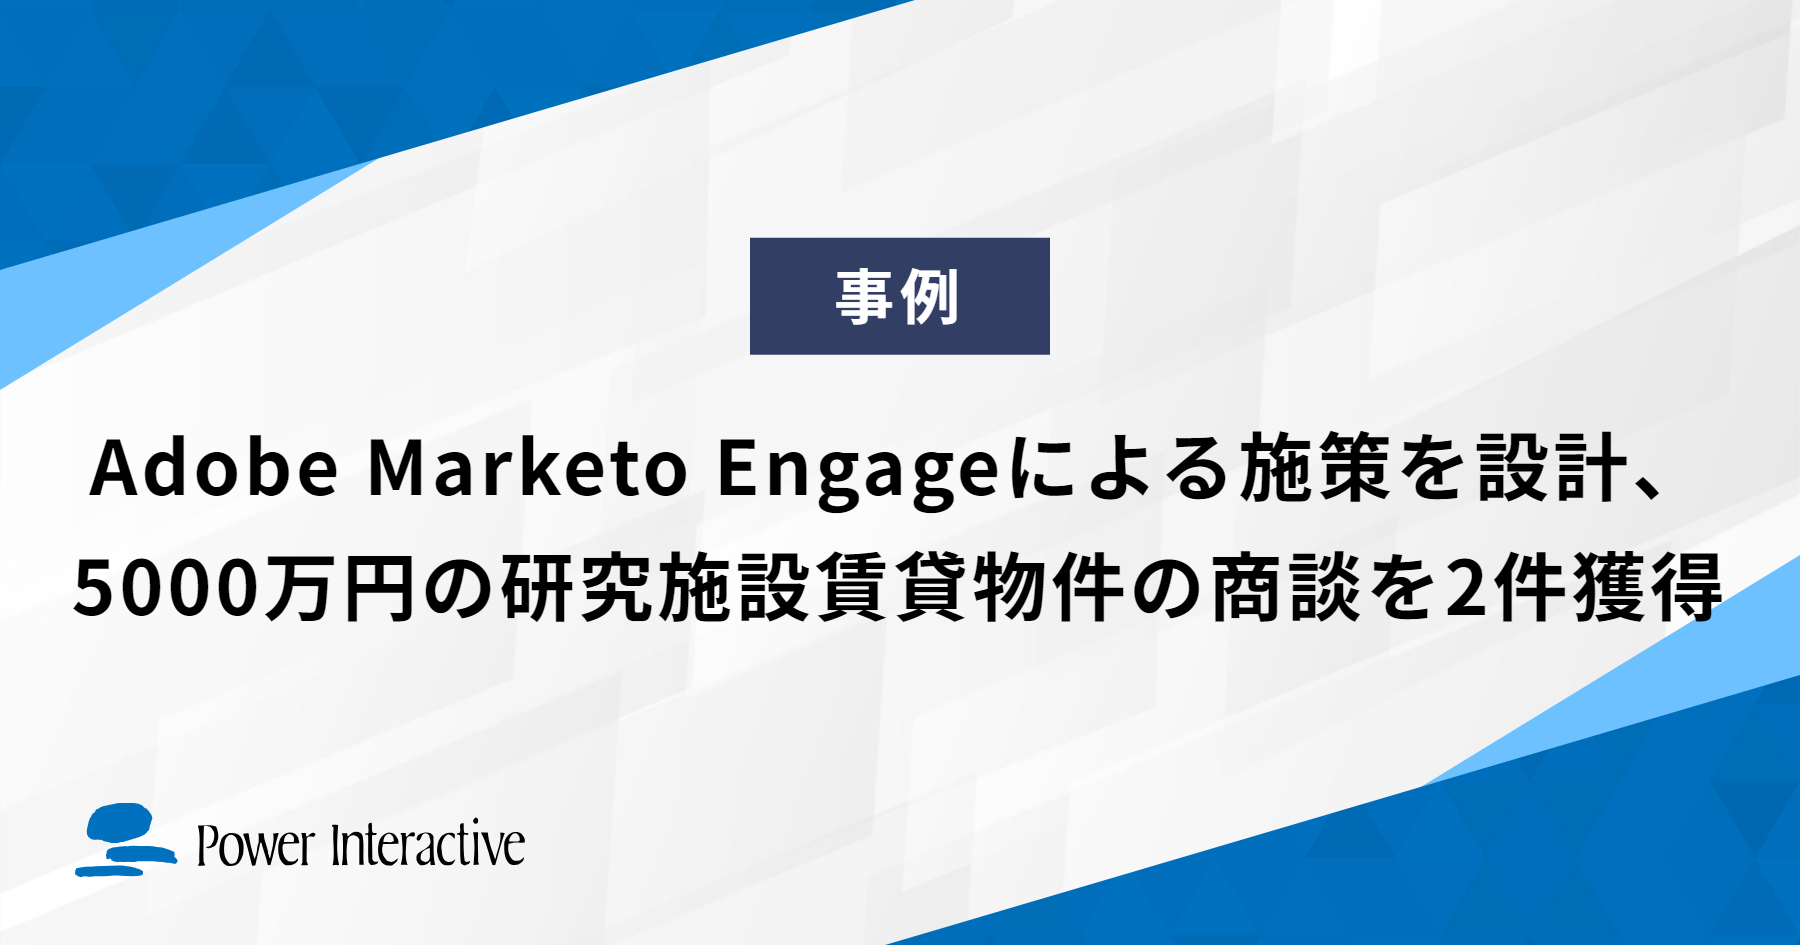 Adobe Marketo Engageによる施策を設計、5000万円の研究施設賃貸物件の商談を2件獲得